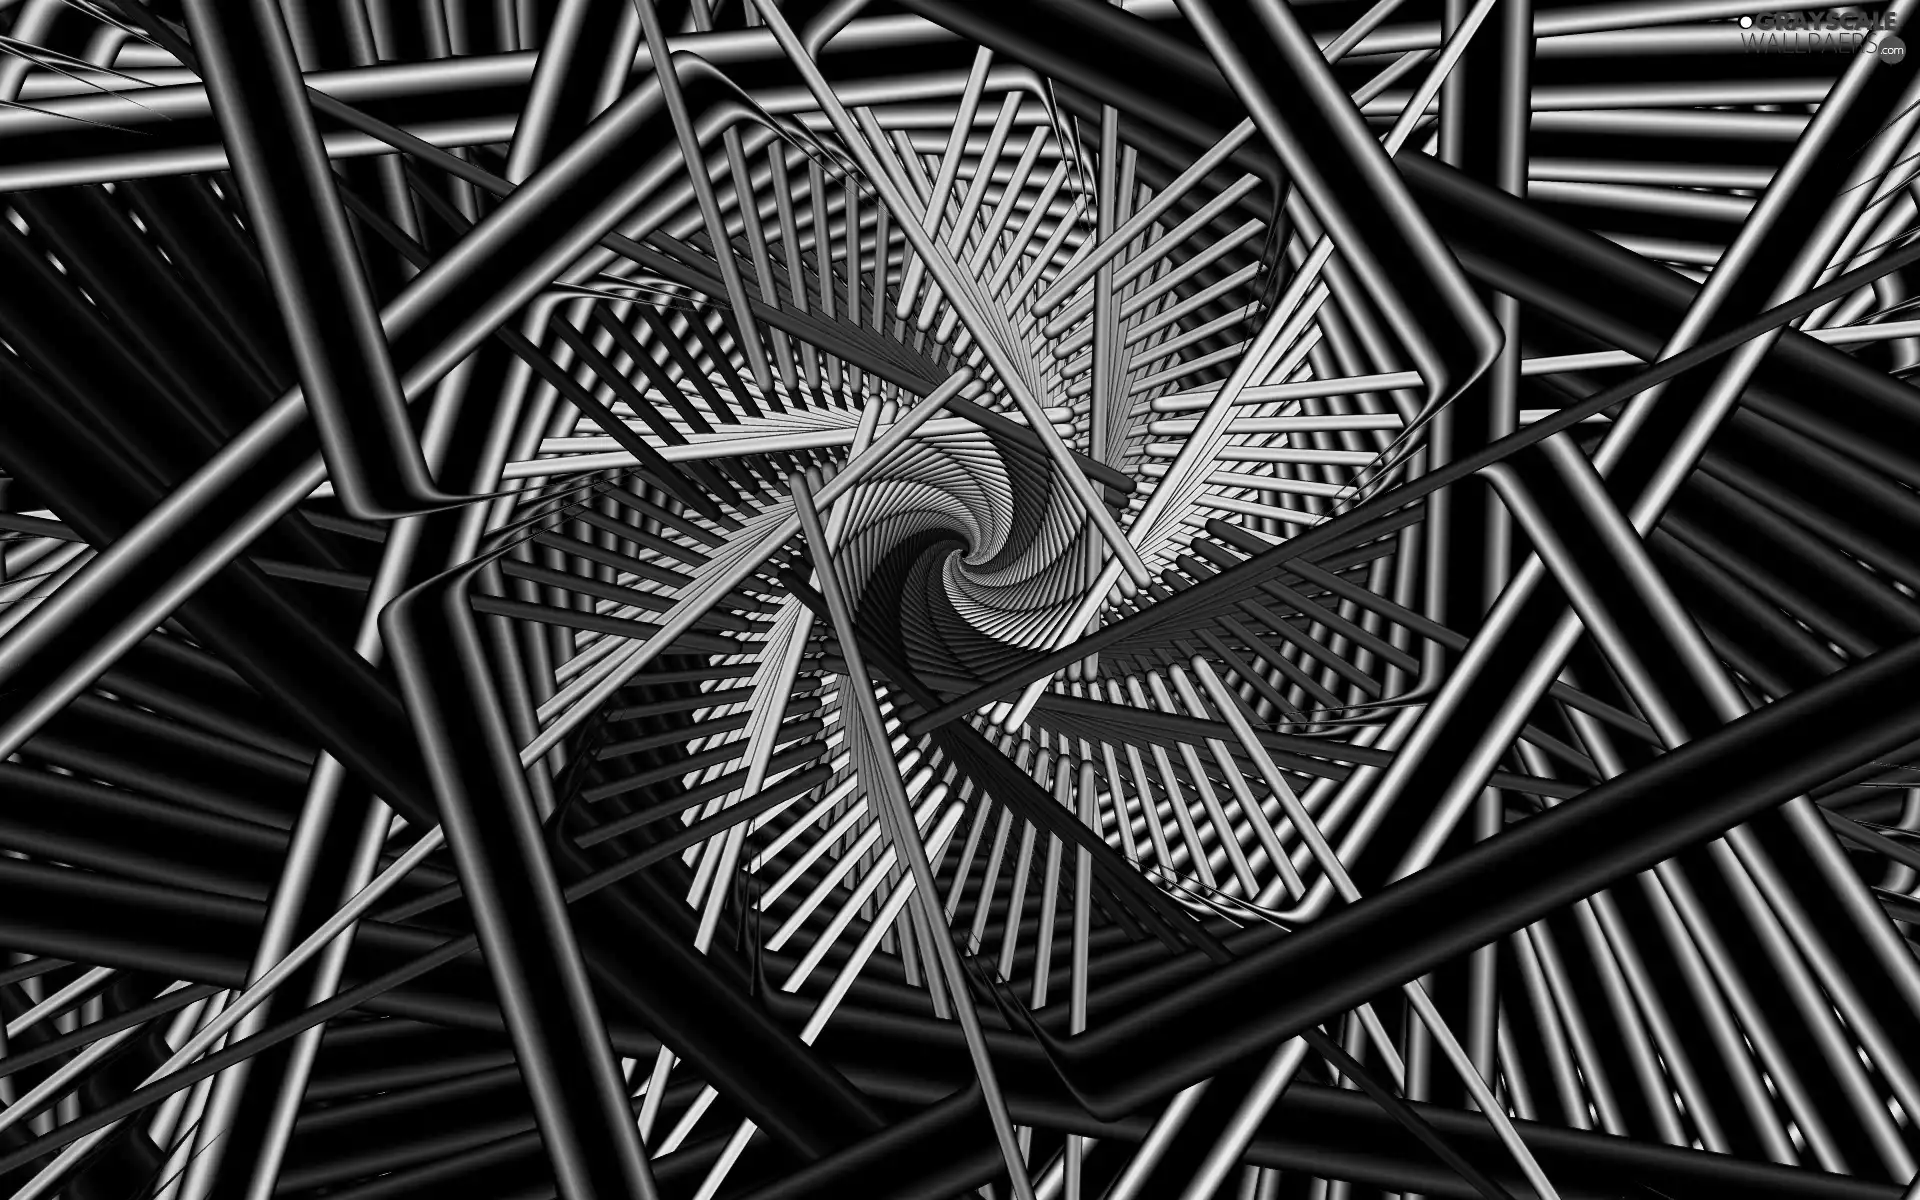 Fraktal, graphics, spiral, abstraction, Geometric